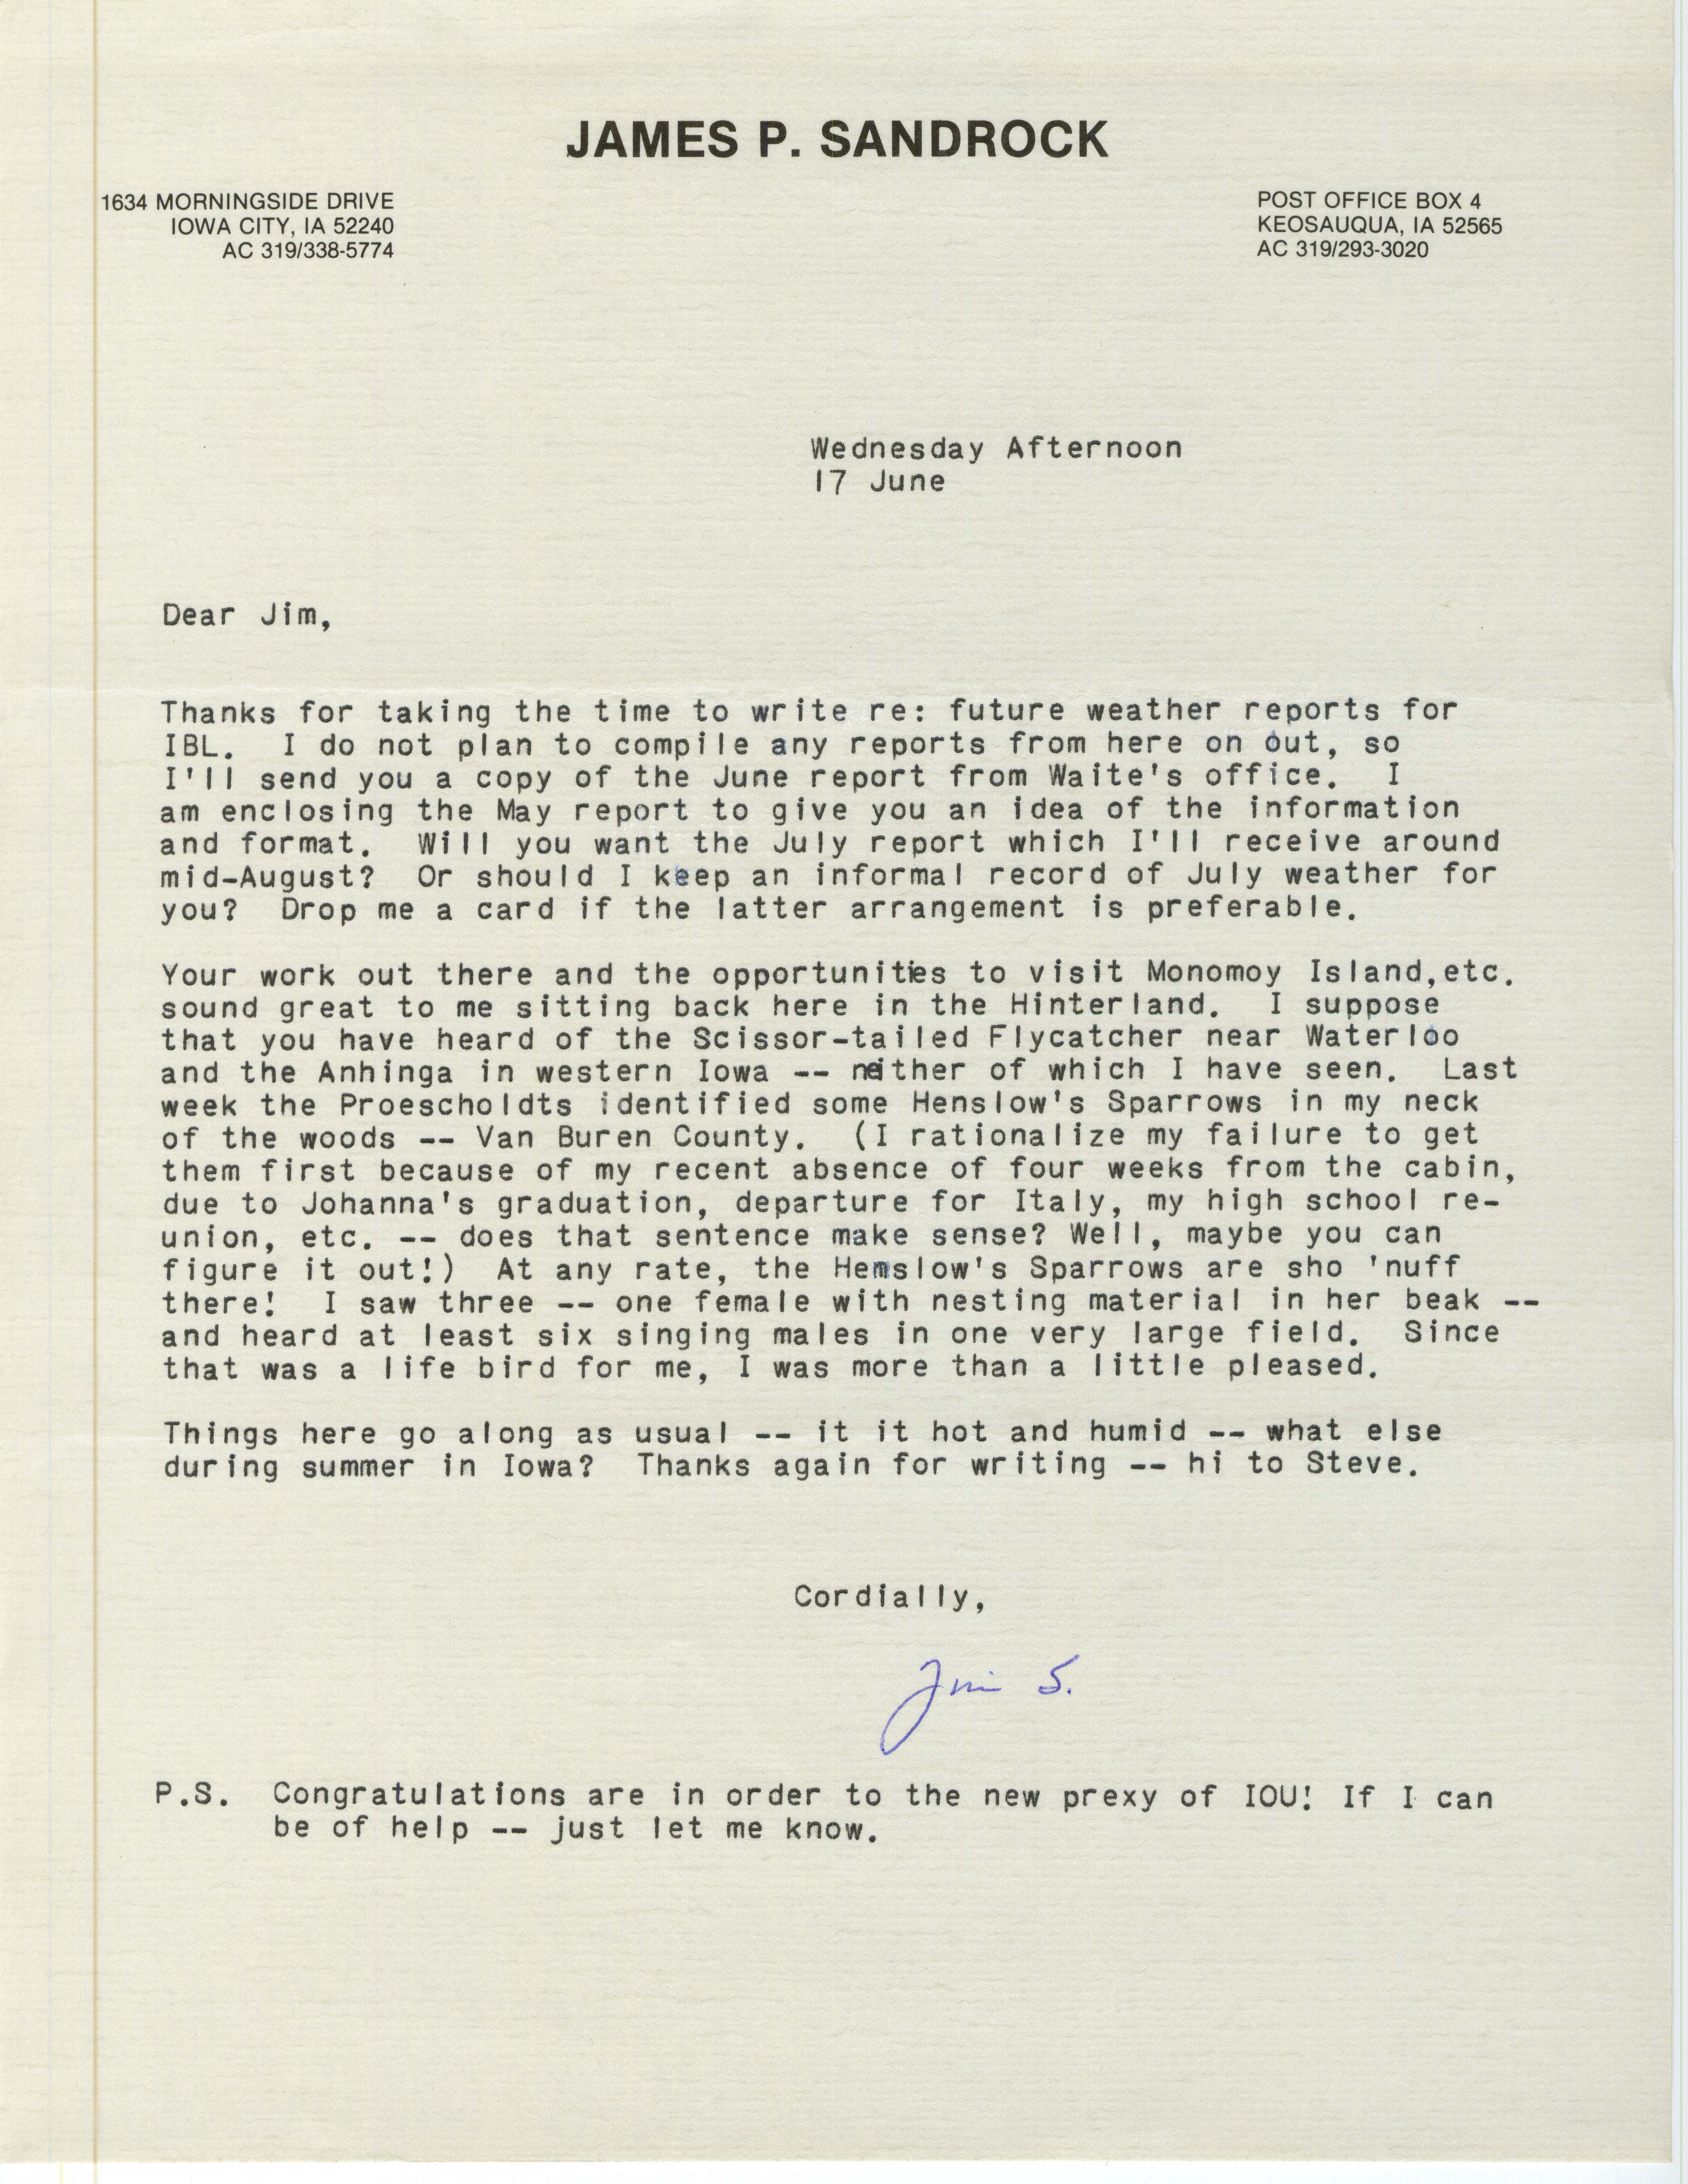 James P. Sandrock letter to James J. Dinsmore regarding weather reports for Iowa Bird Life, June 17, 1987